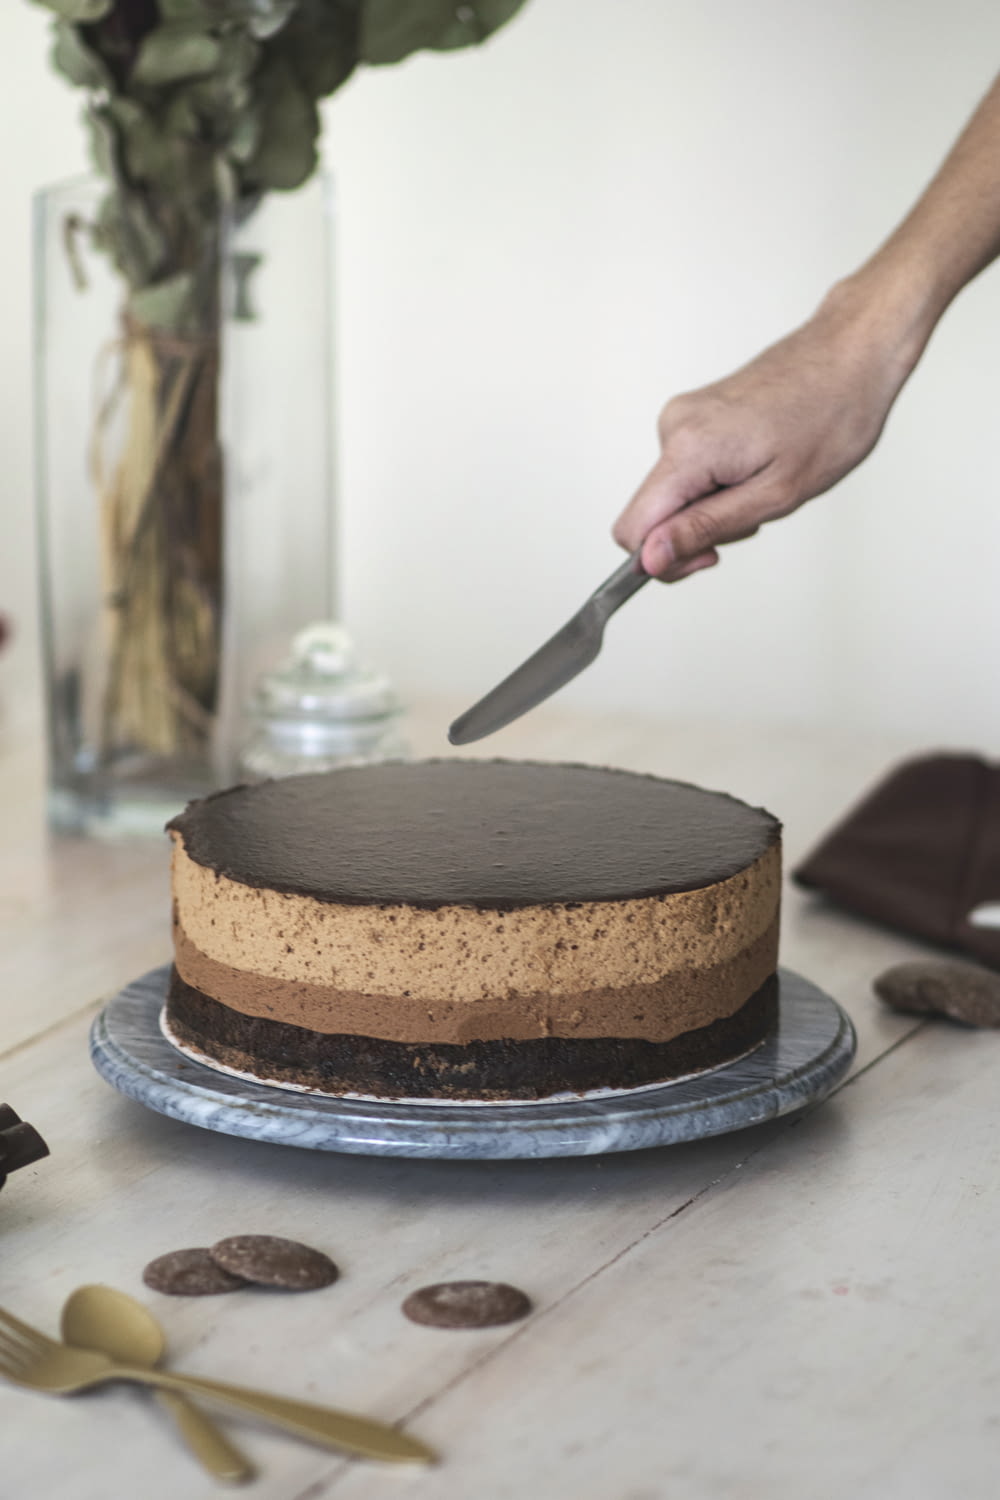 person slicing chocolate cake on black ceramic plate